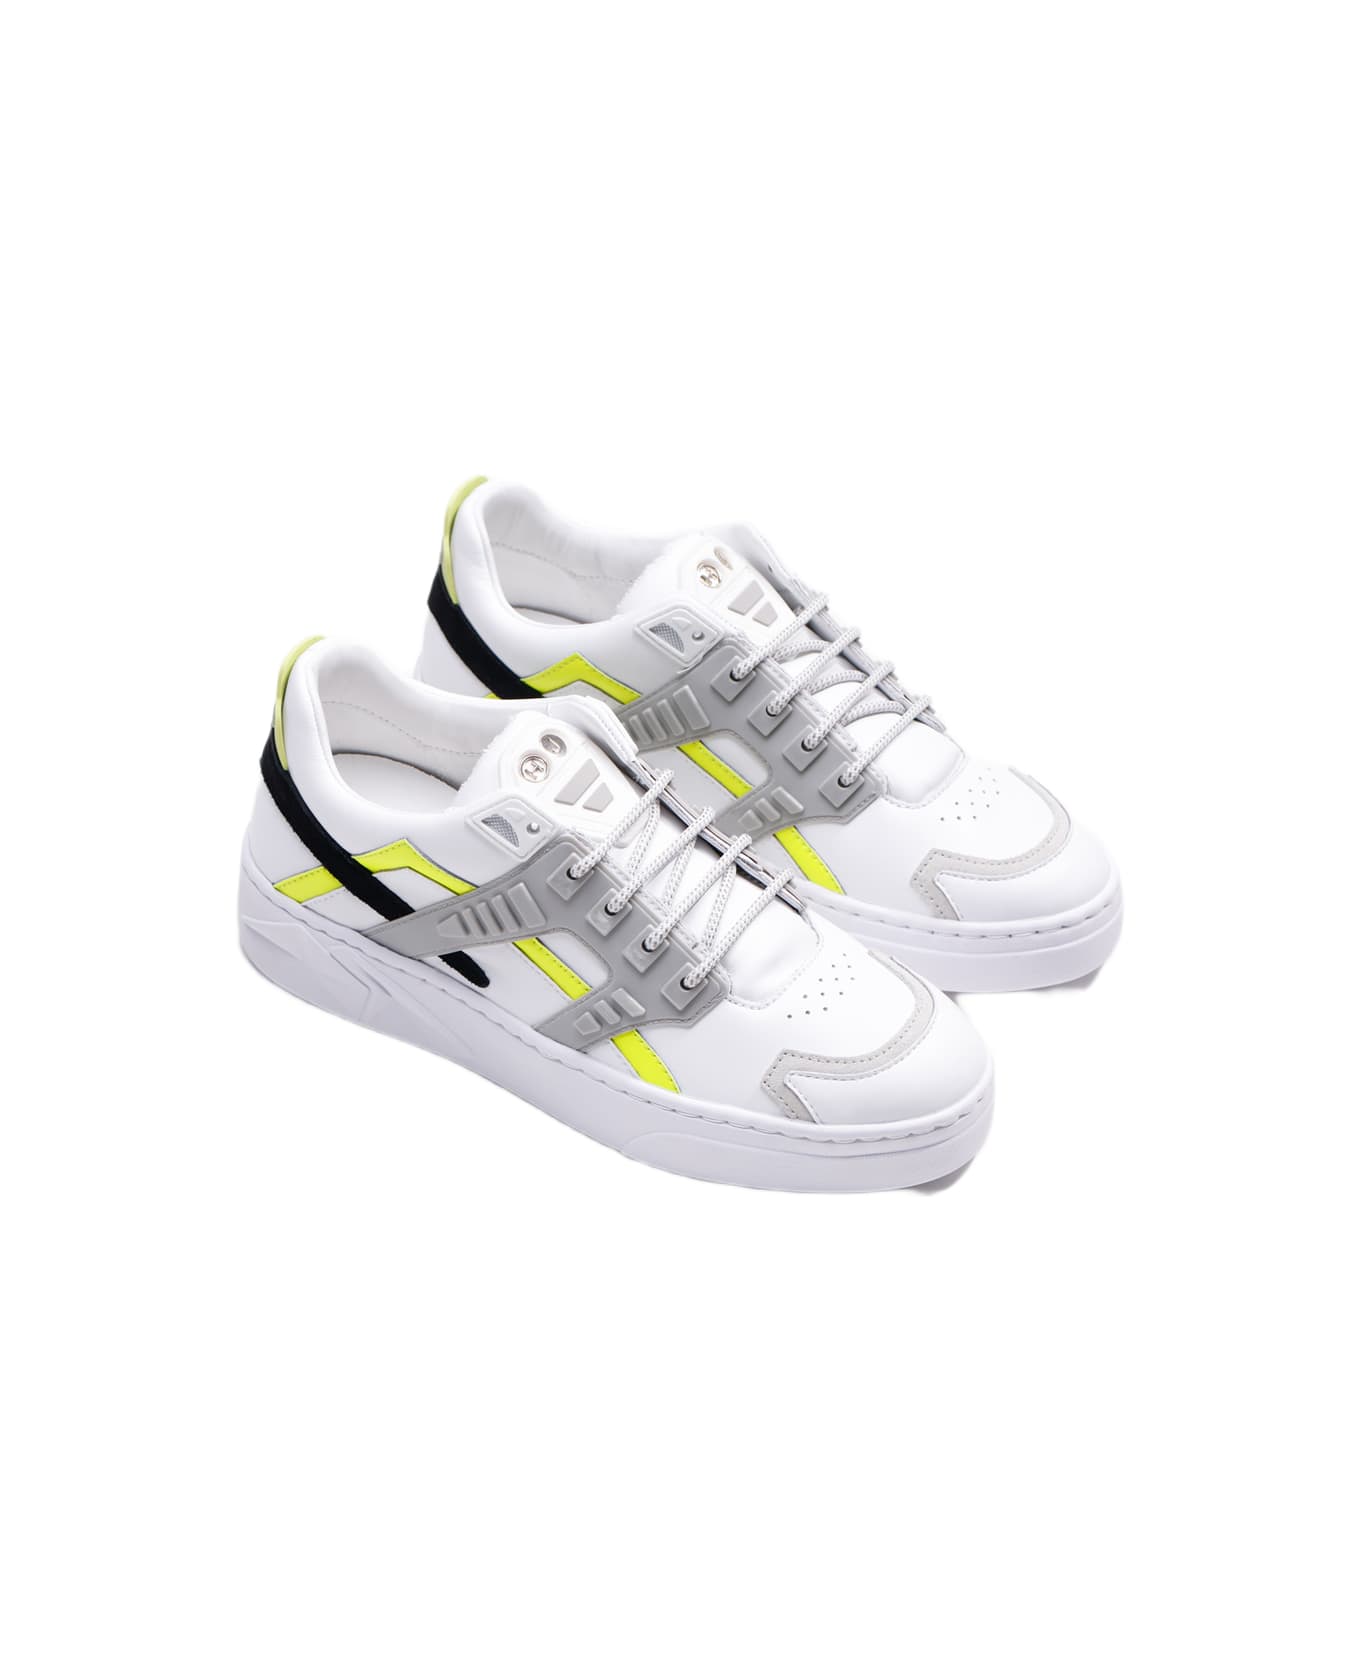 Hide&Jack Low Top Sneaker - Mini Silverstone Yellow White